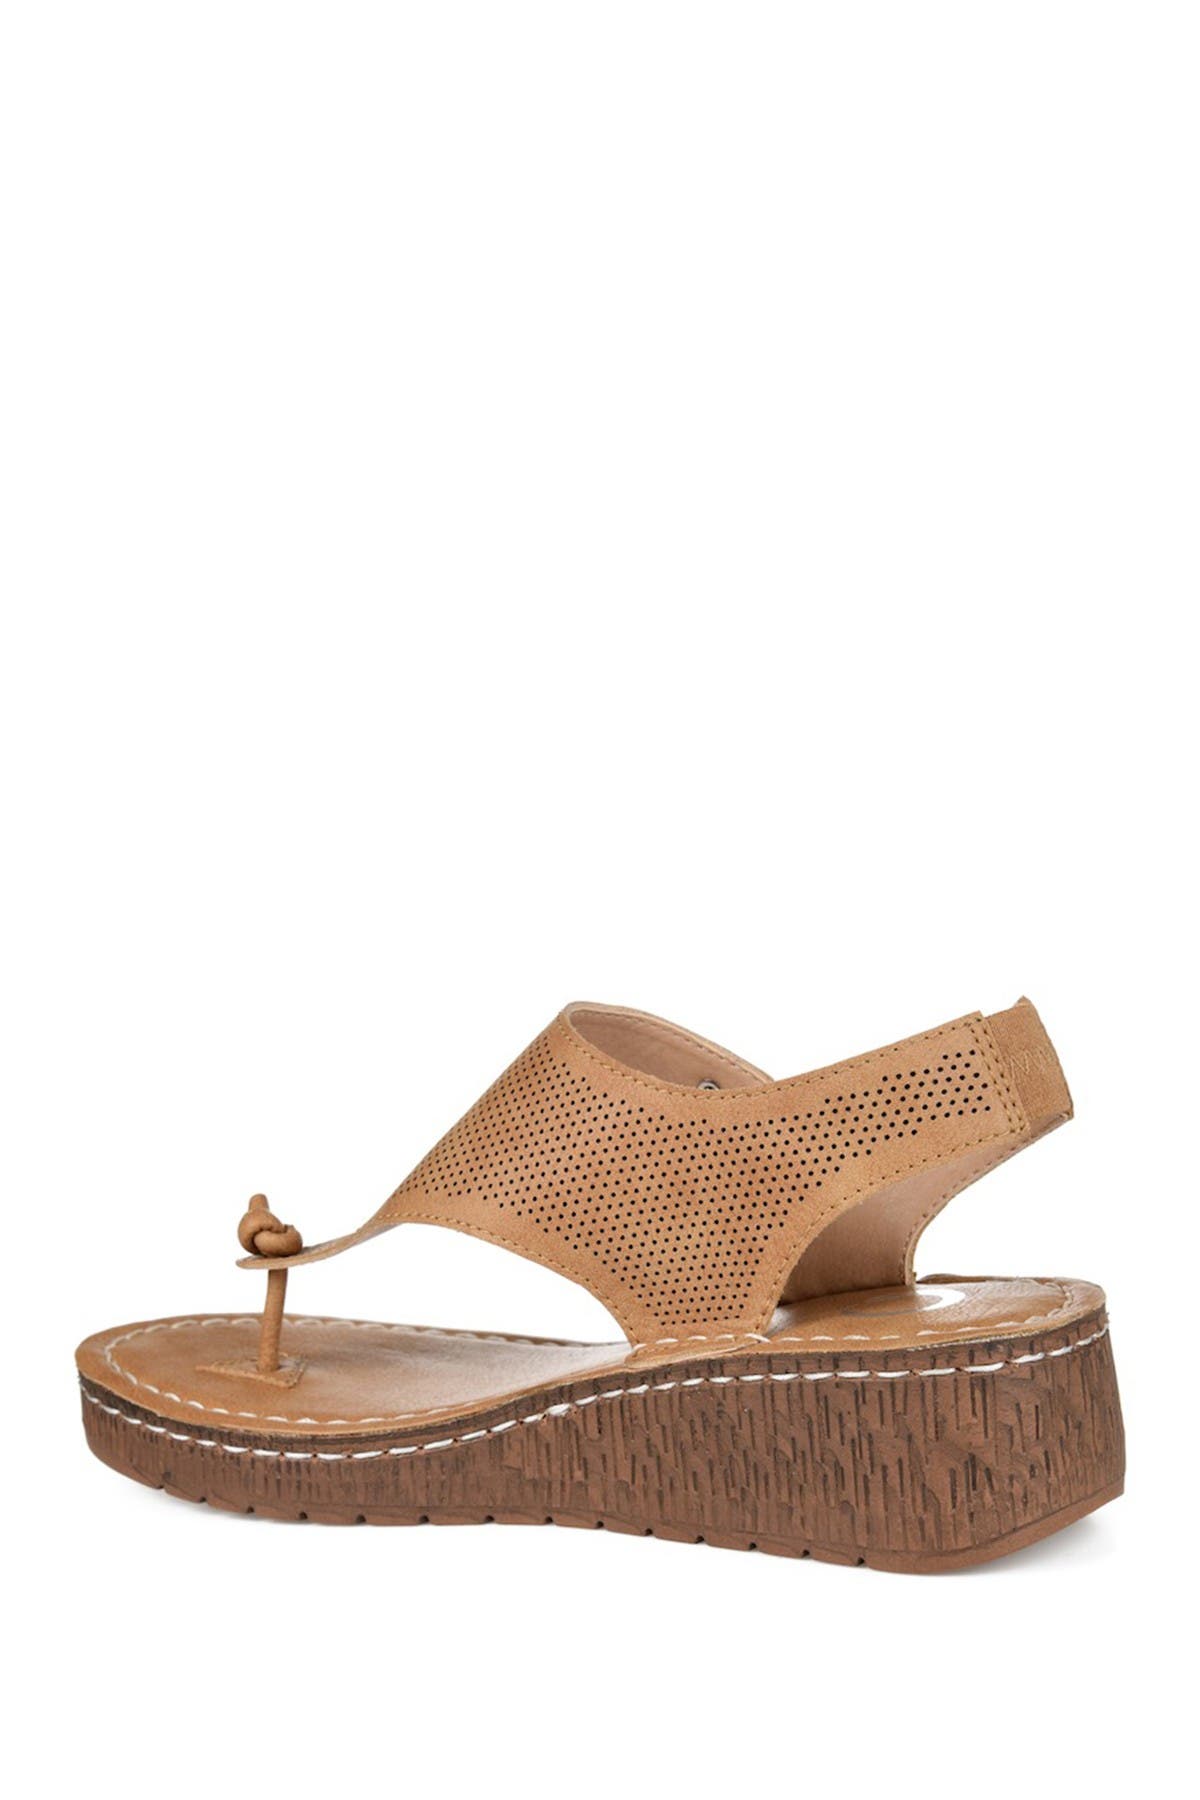 Journee Collection Mckell Wedge Sandal In Medium Brown5